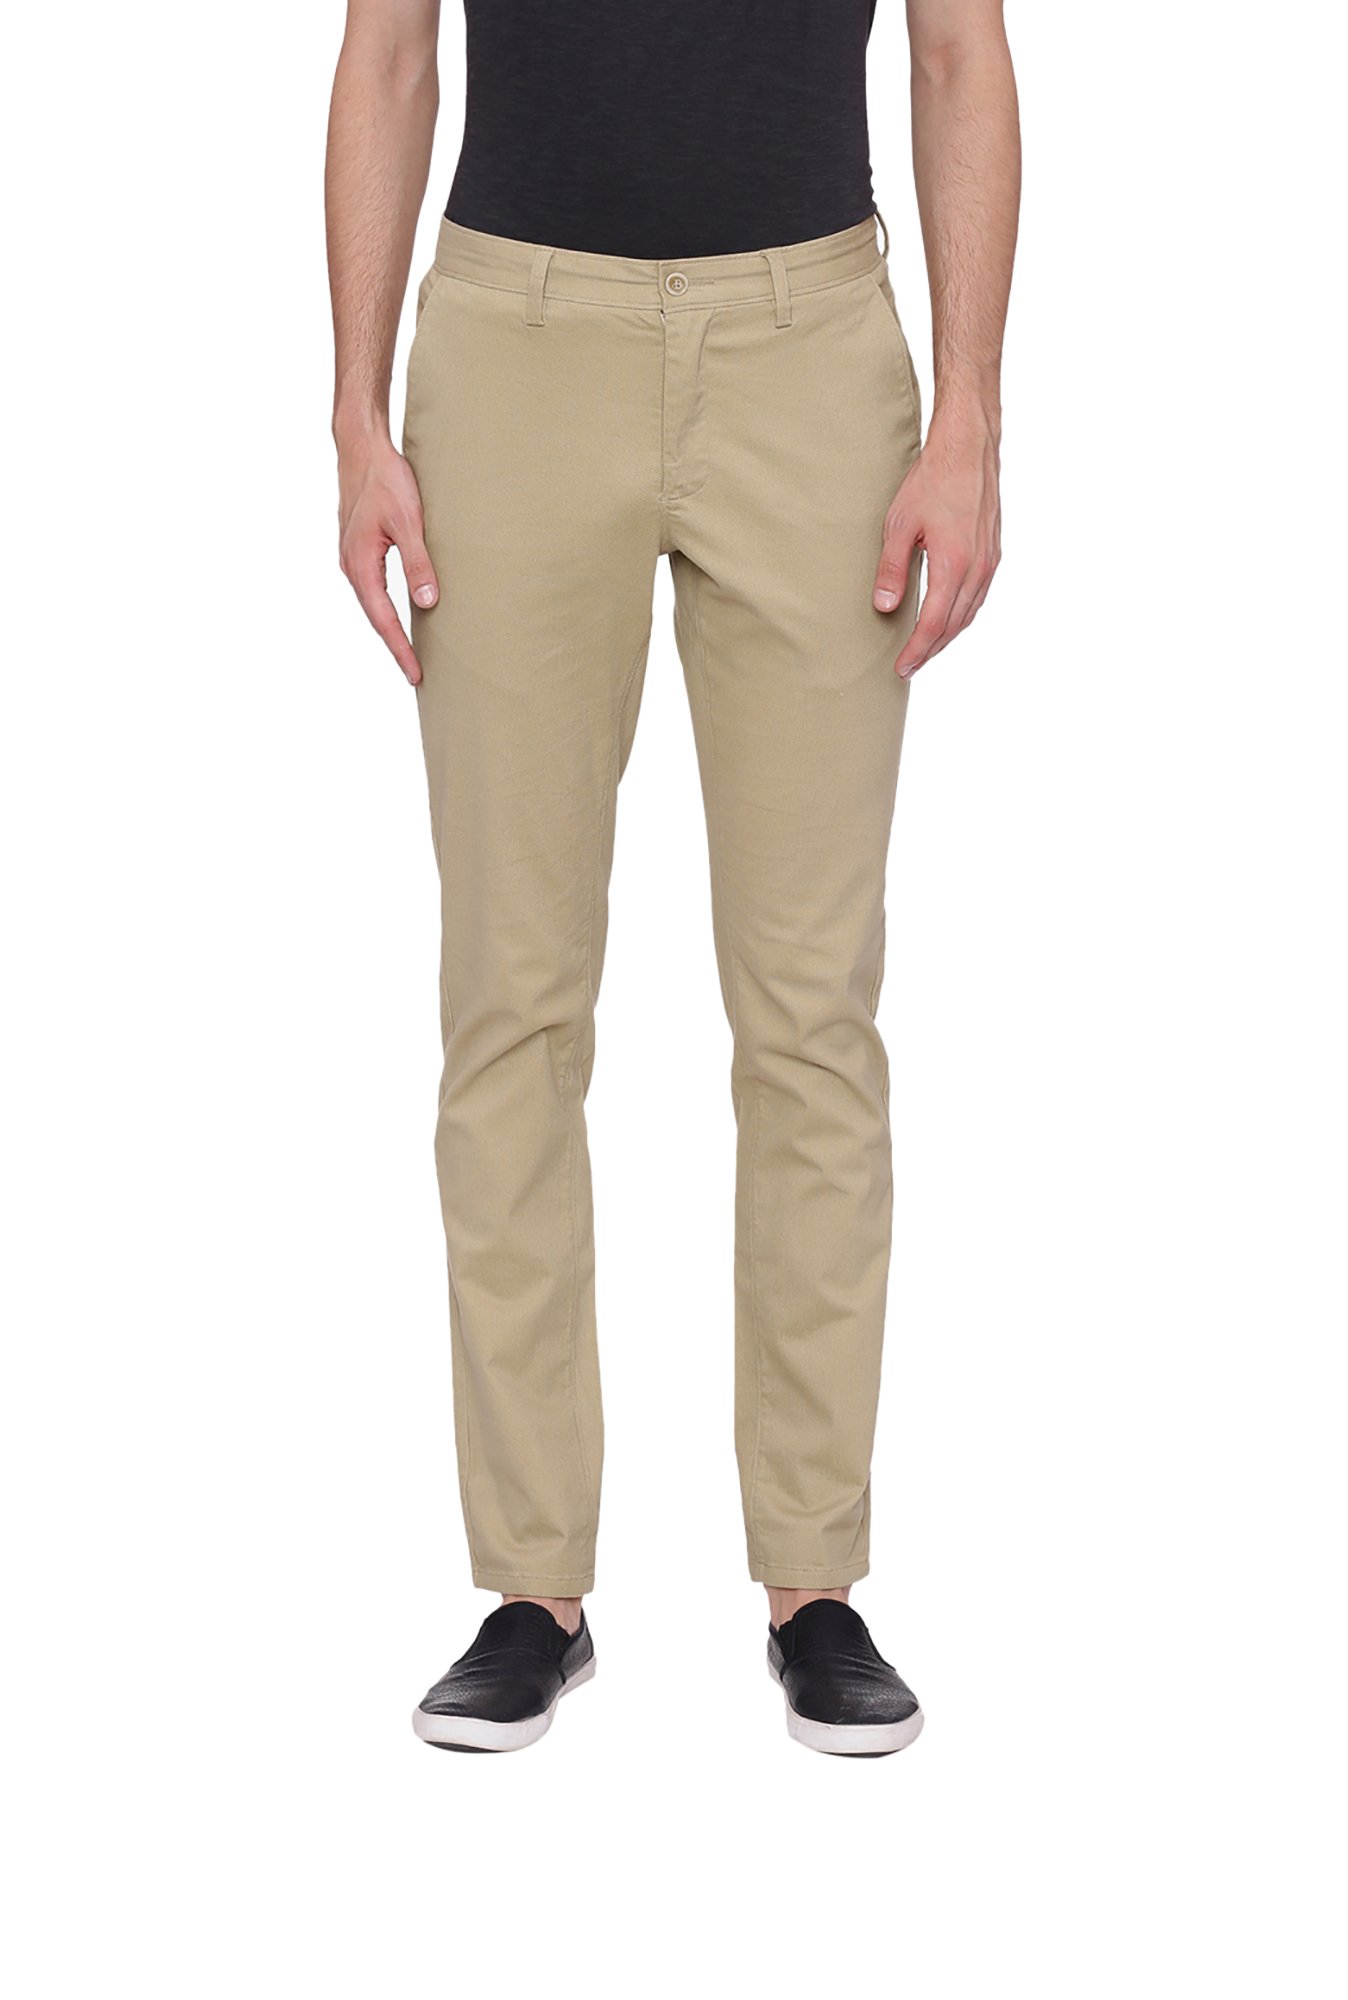 Buy BASICS Men Grey Solid Regular fit Regular trousers Online at Low Prices  in India  Paytmmallcom